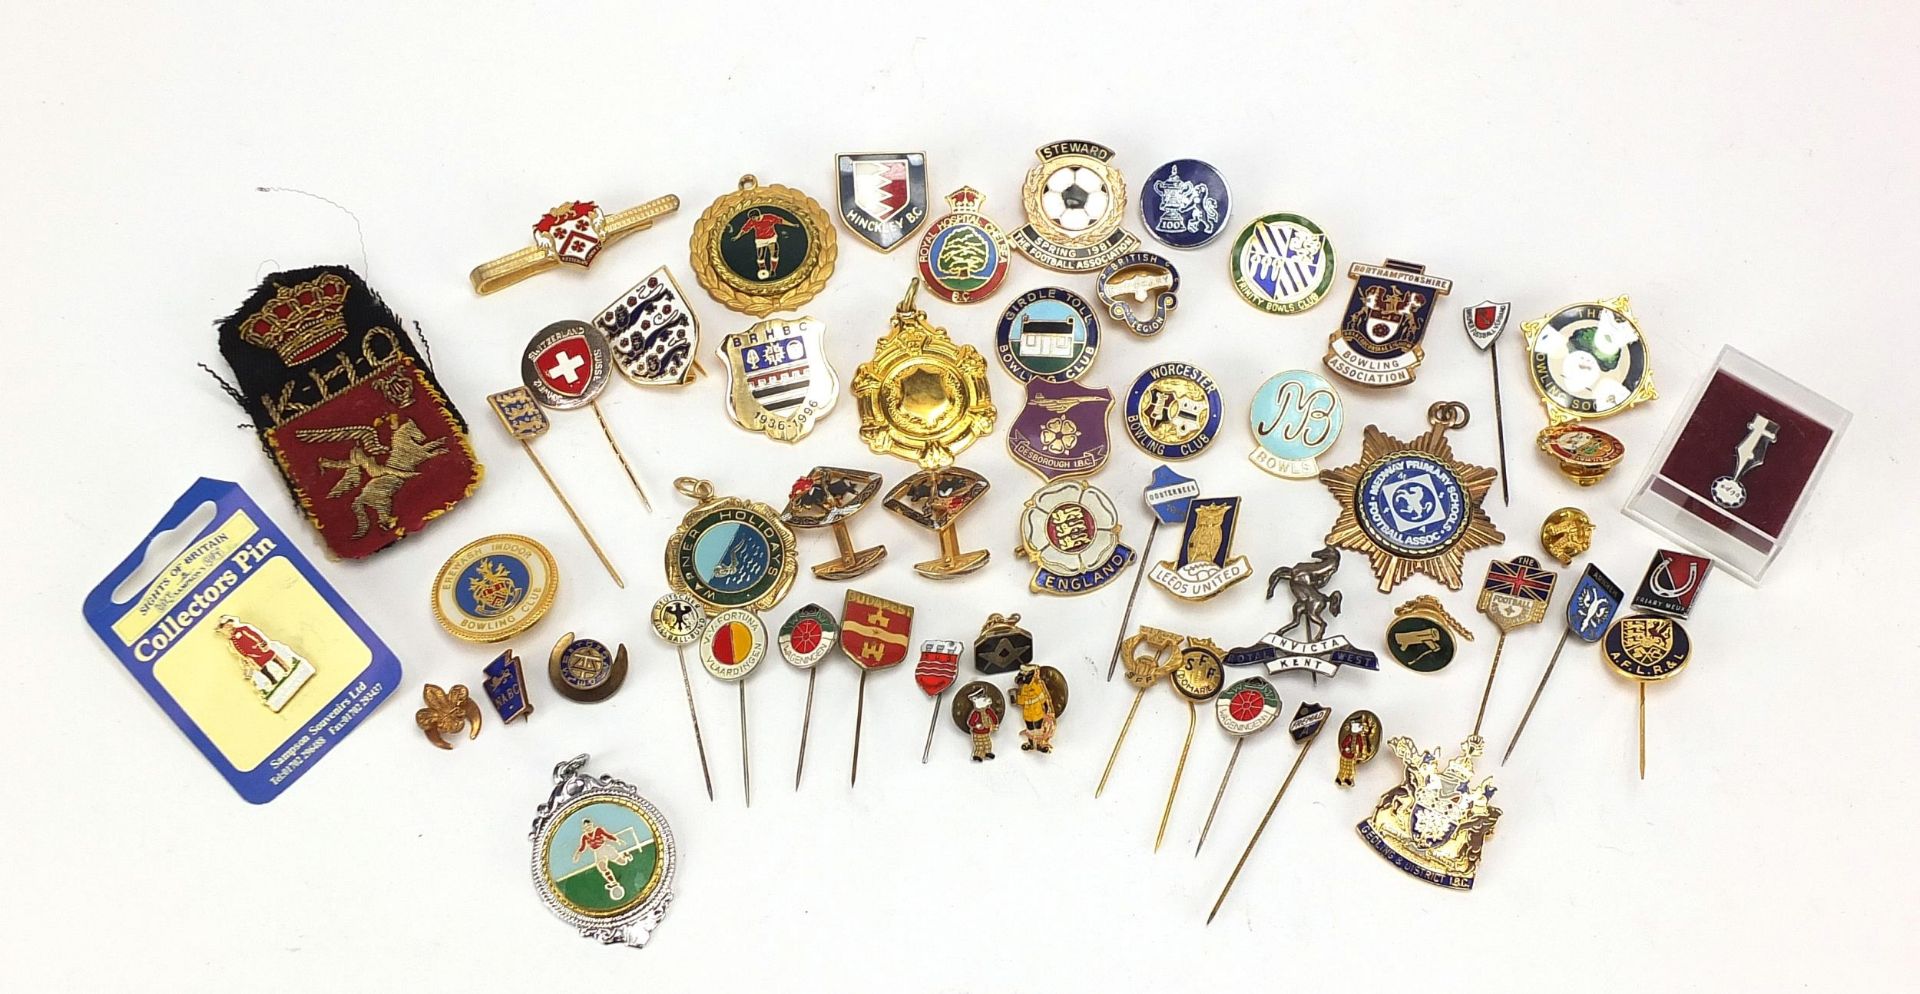 Vintage and later badges including Football Association 1981 Steward